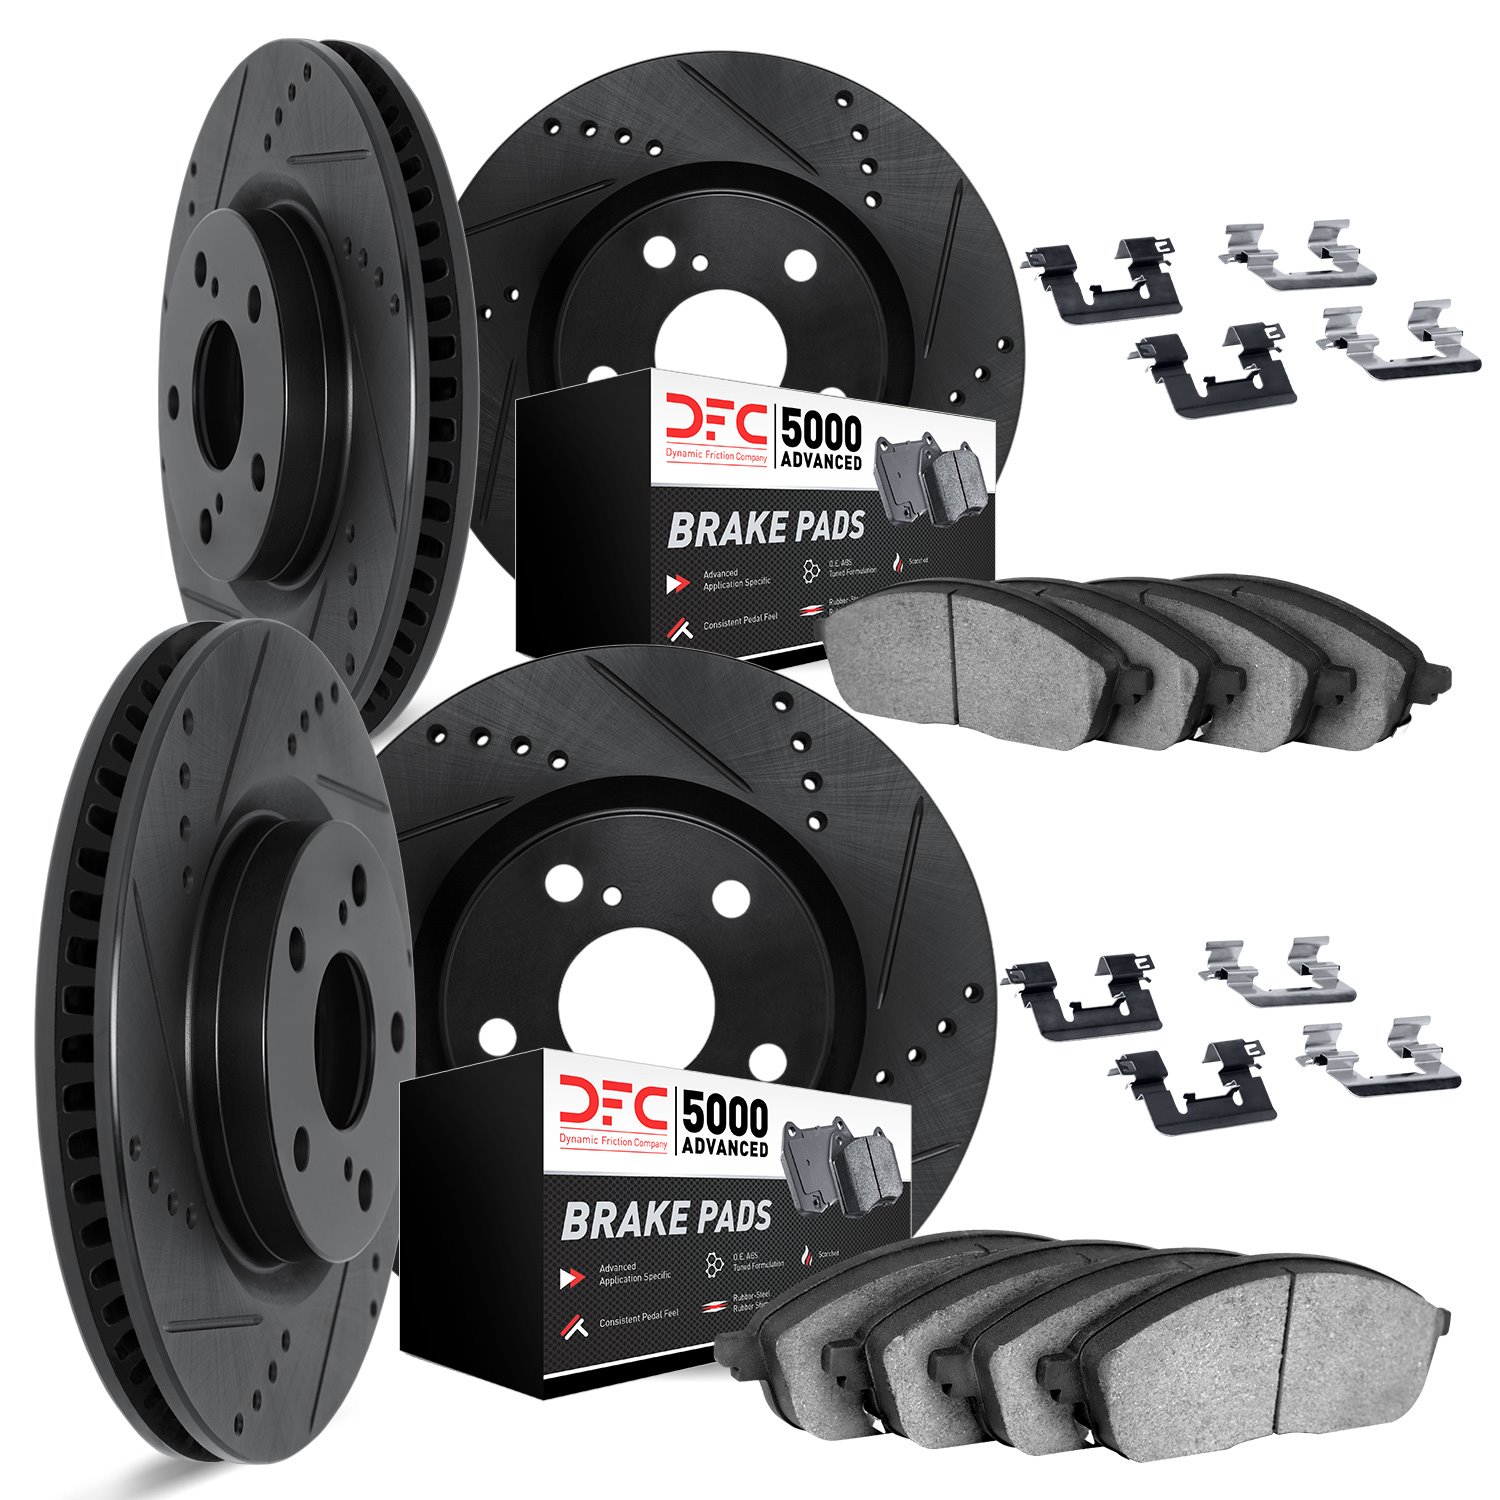 8514-75026 Drilled/Slotted Brake Rotors w/5000 Advanced Brake Pads Kit & Hardware [Black], Fits Select Lexus/Toyota/Scion, Posit